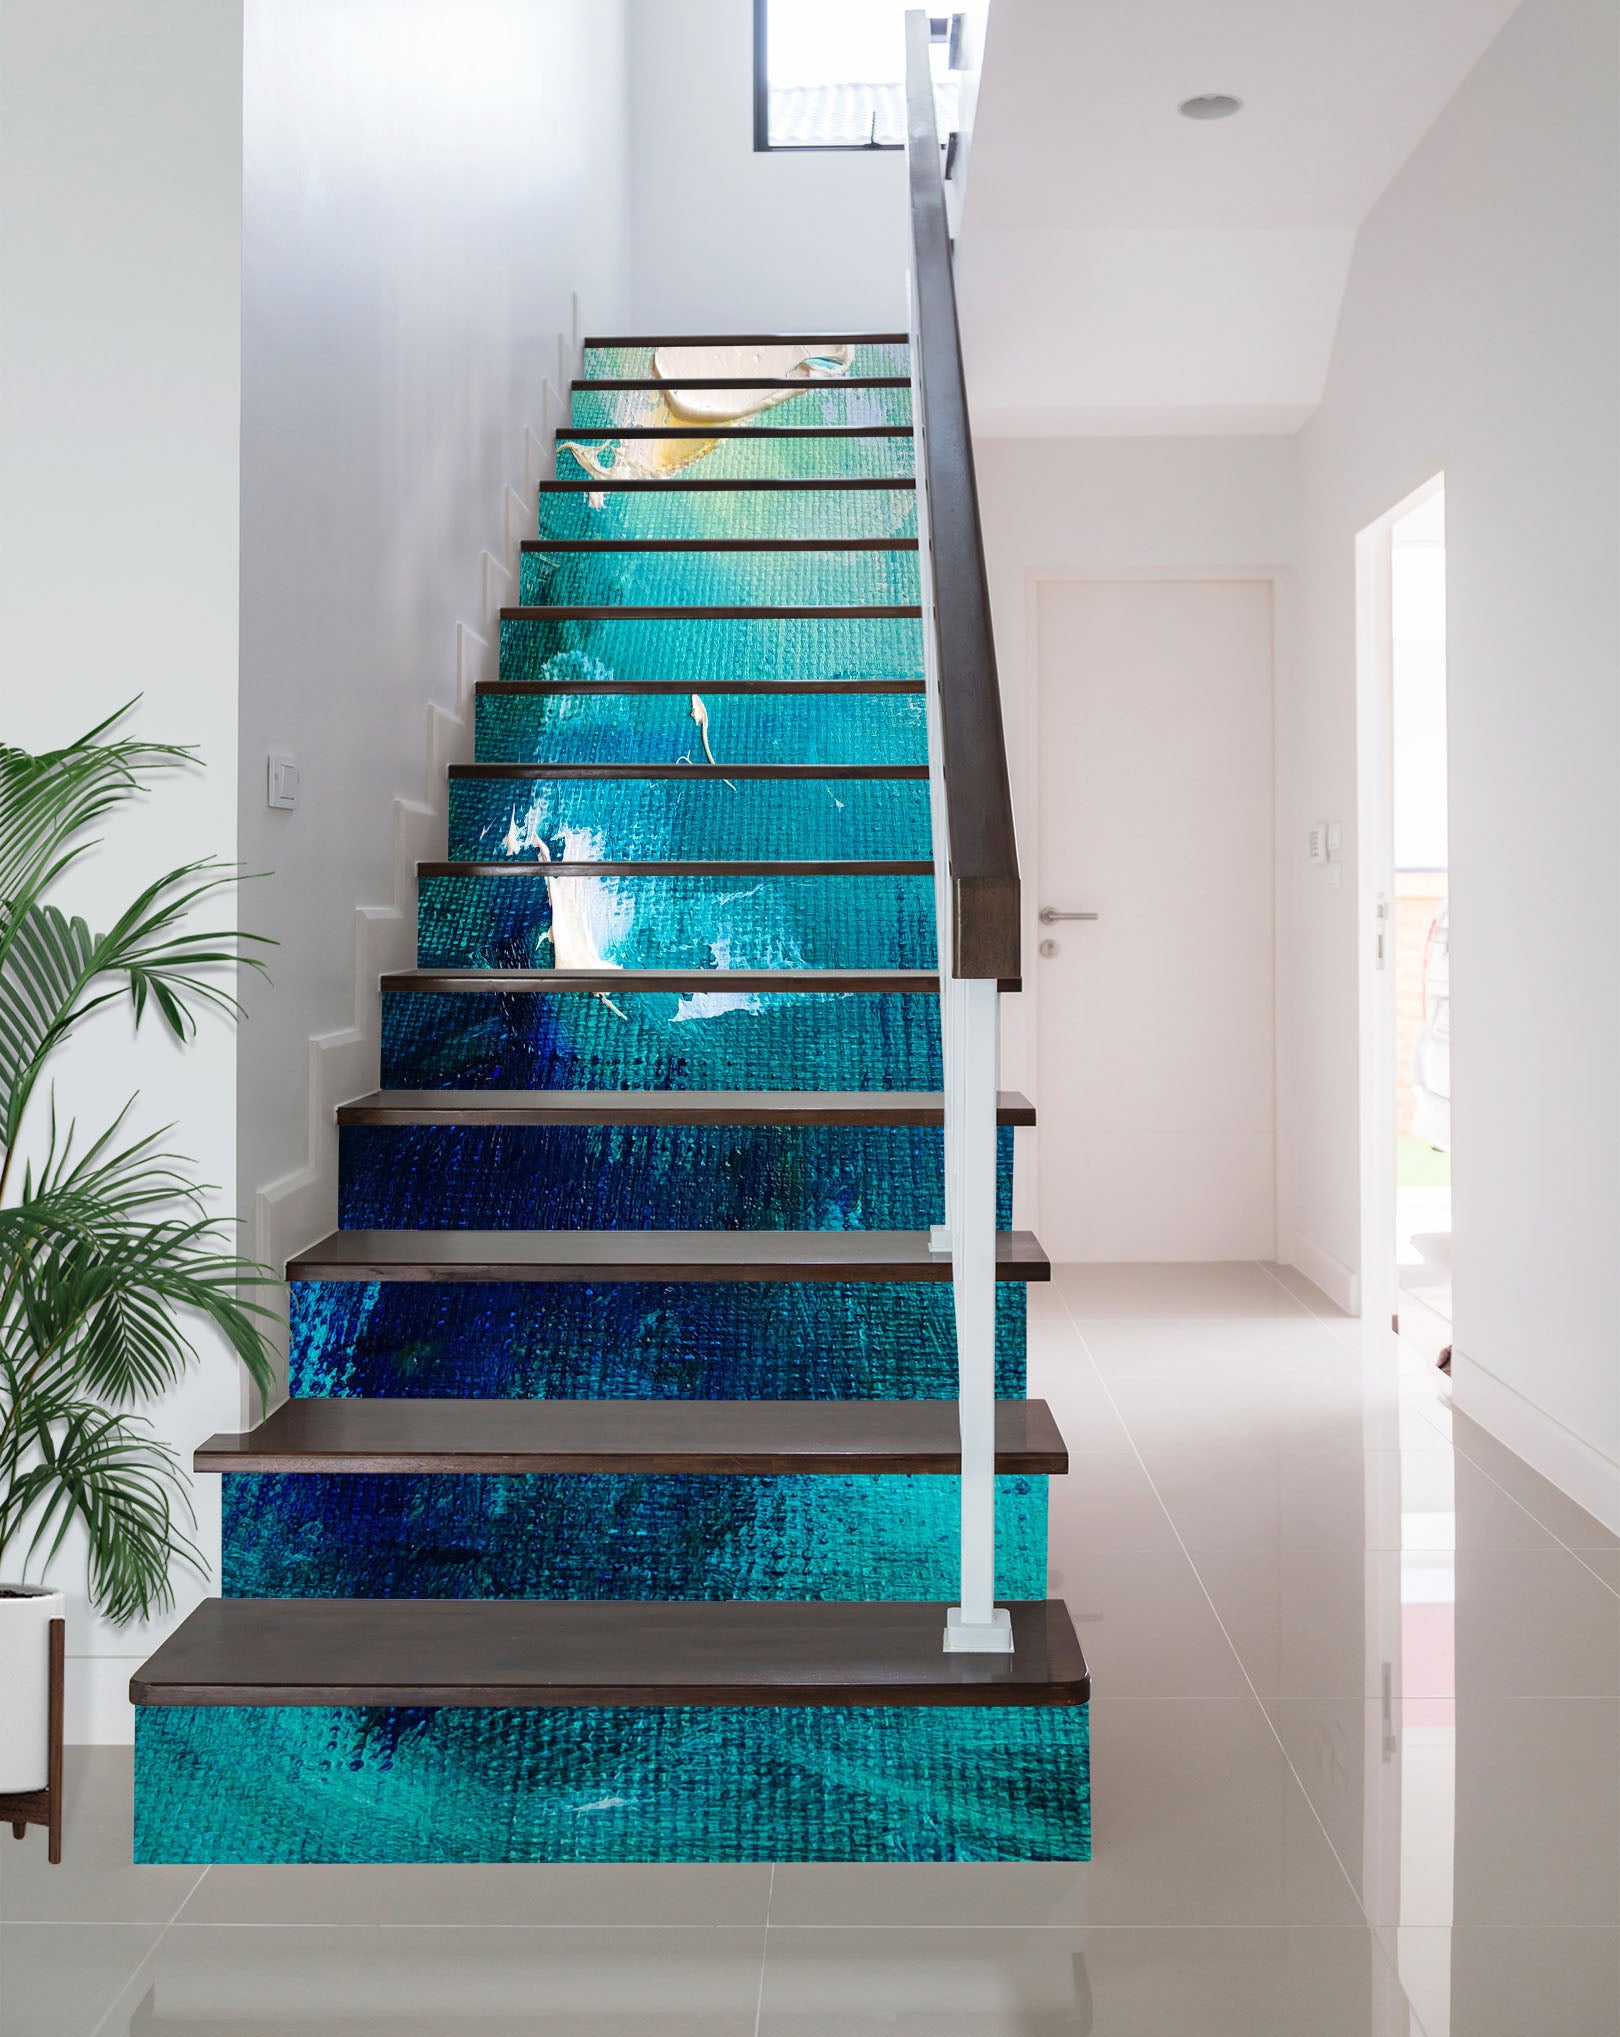 3D Blue Pigment 2019 Skromova Marina Stair Risers